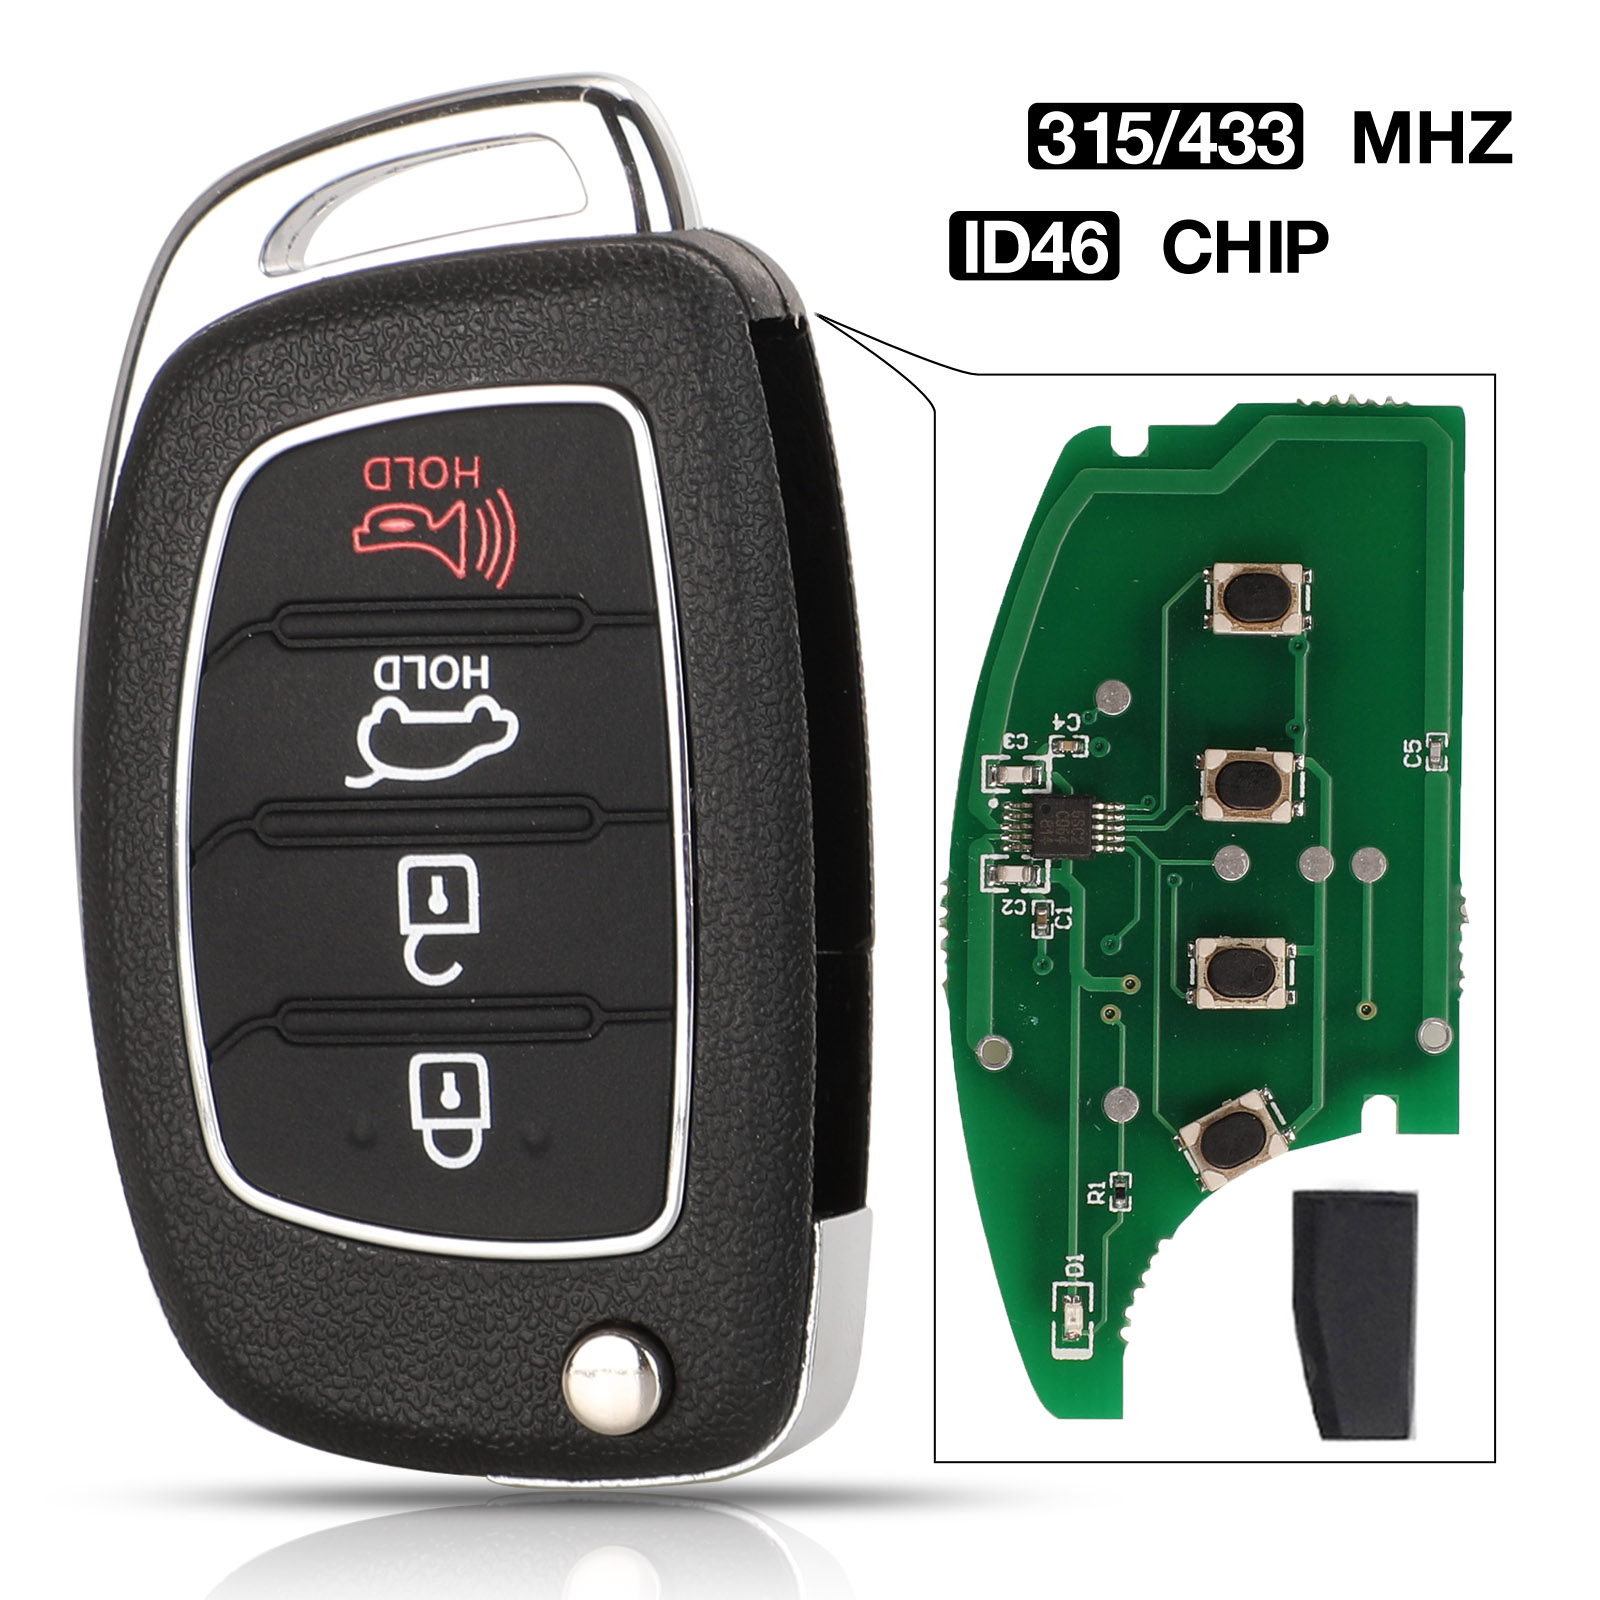 Jingyuqin 4B 315/433 Mhz Met ID46 Chip Afstandsbediening Auto Sleutel Voor Hyundai IX35 I20 Controle Sleutel Met Blade